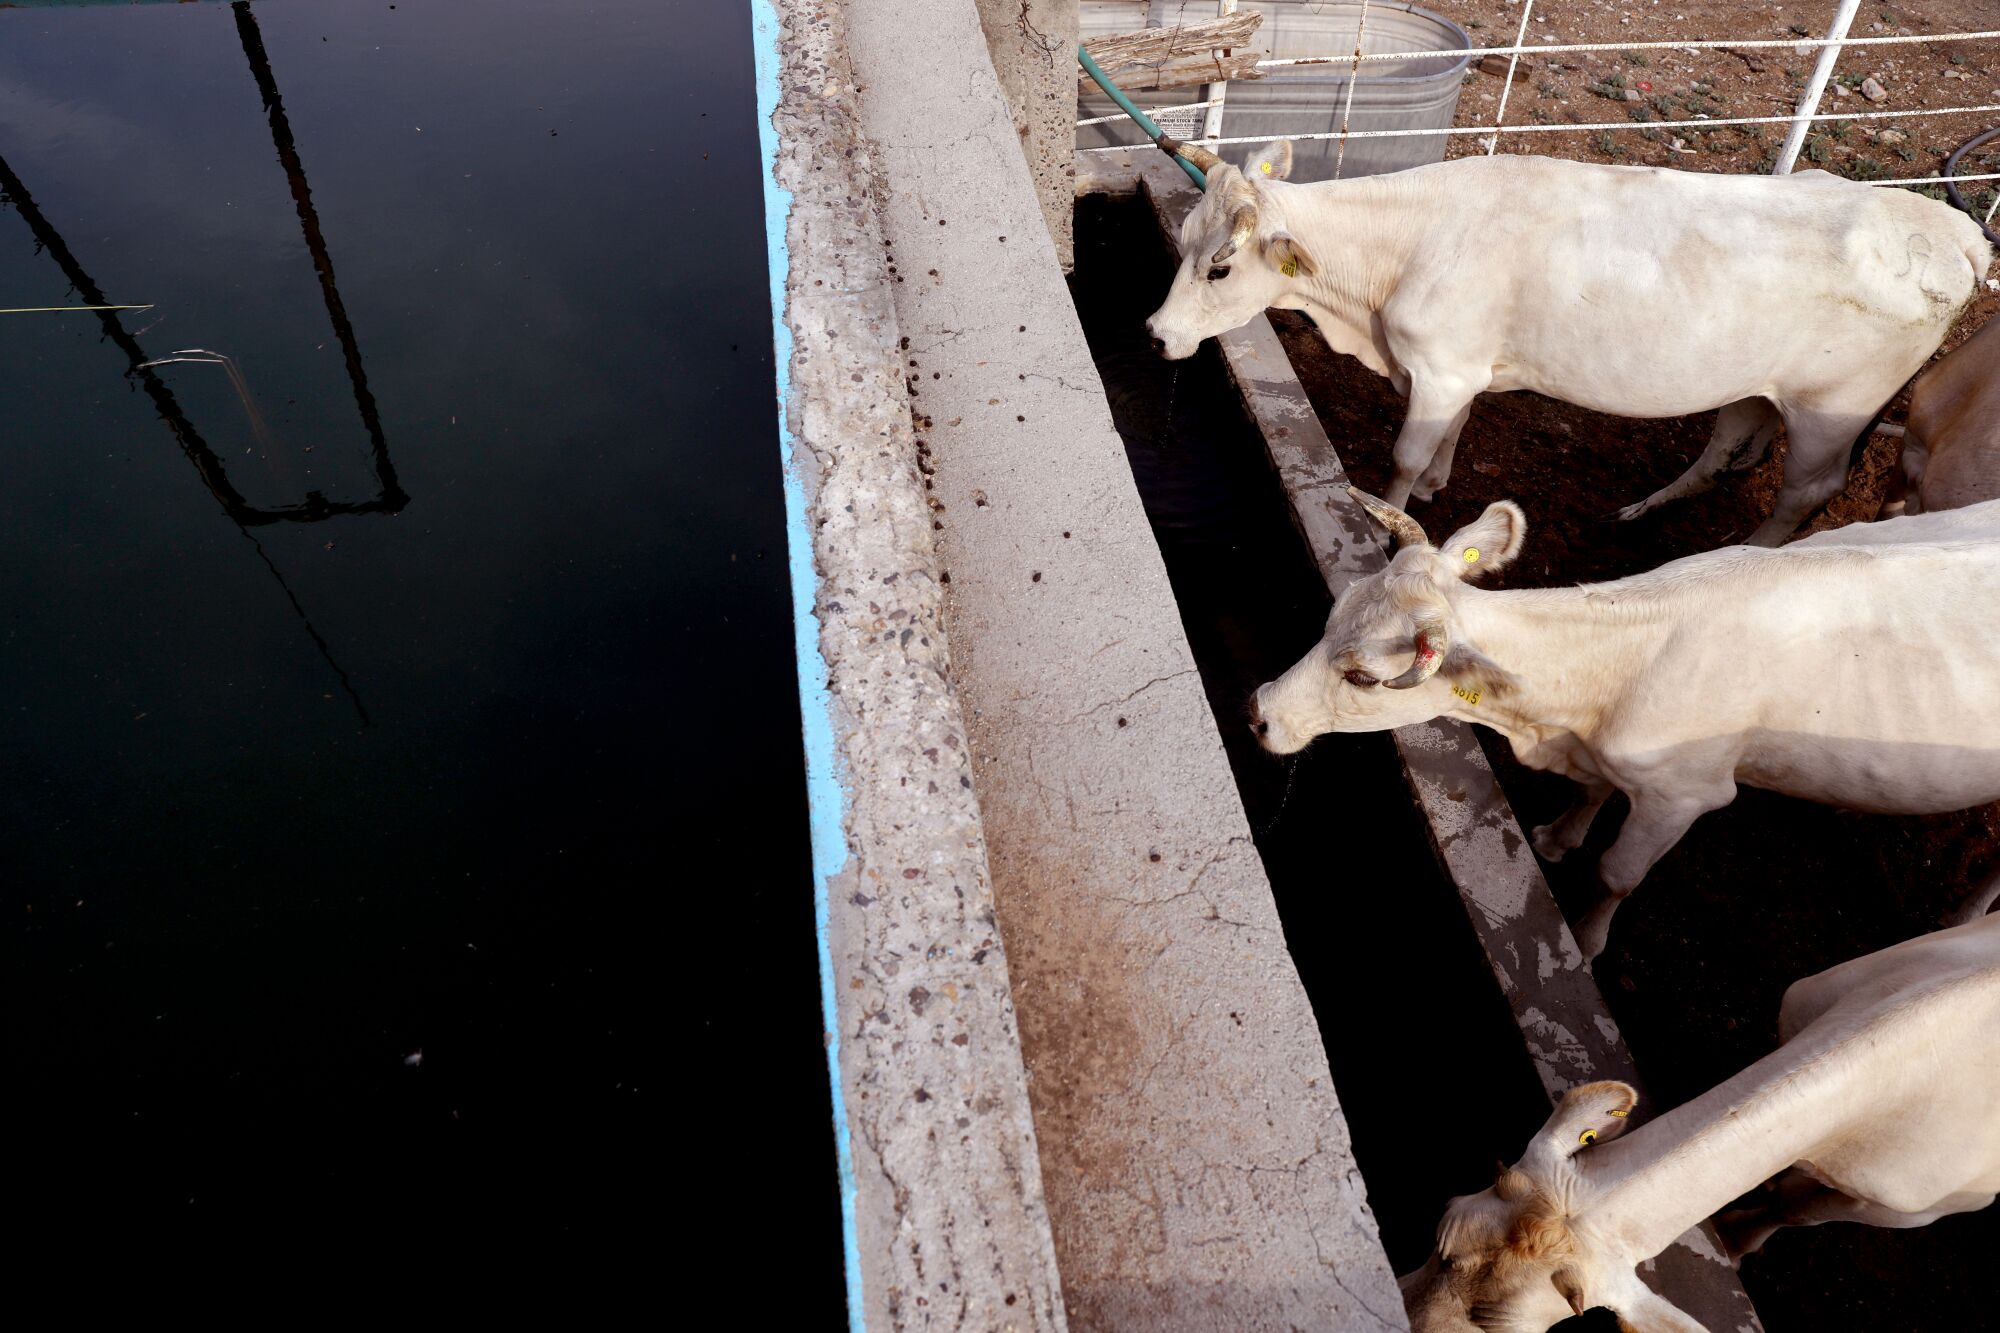  Healthy livestock drink water from a trough at Rancho La Ventana.